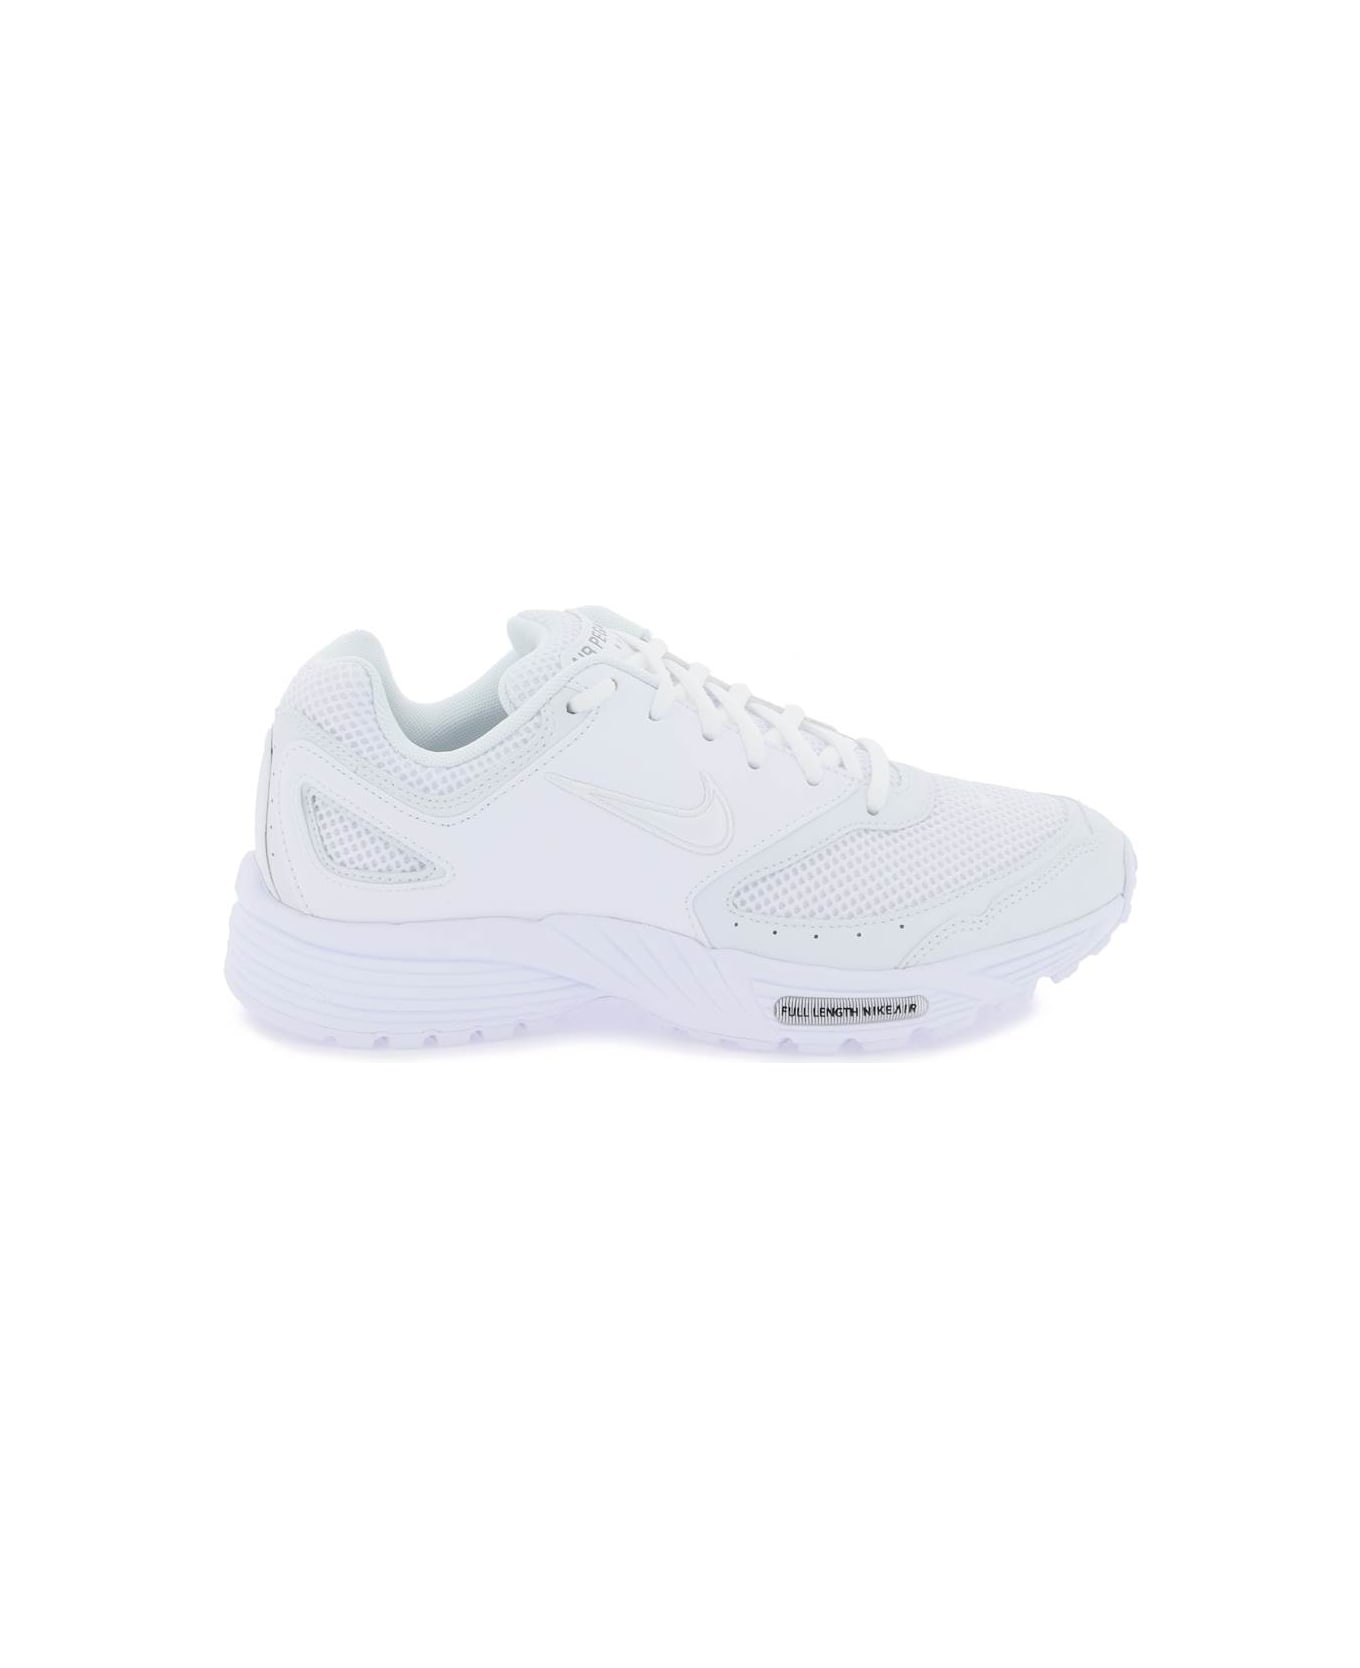 Comme Des Garçons Homme Plus Air Pegasus monster 2005 Sp Sneakers X Nike - WHITE (White)